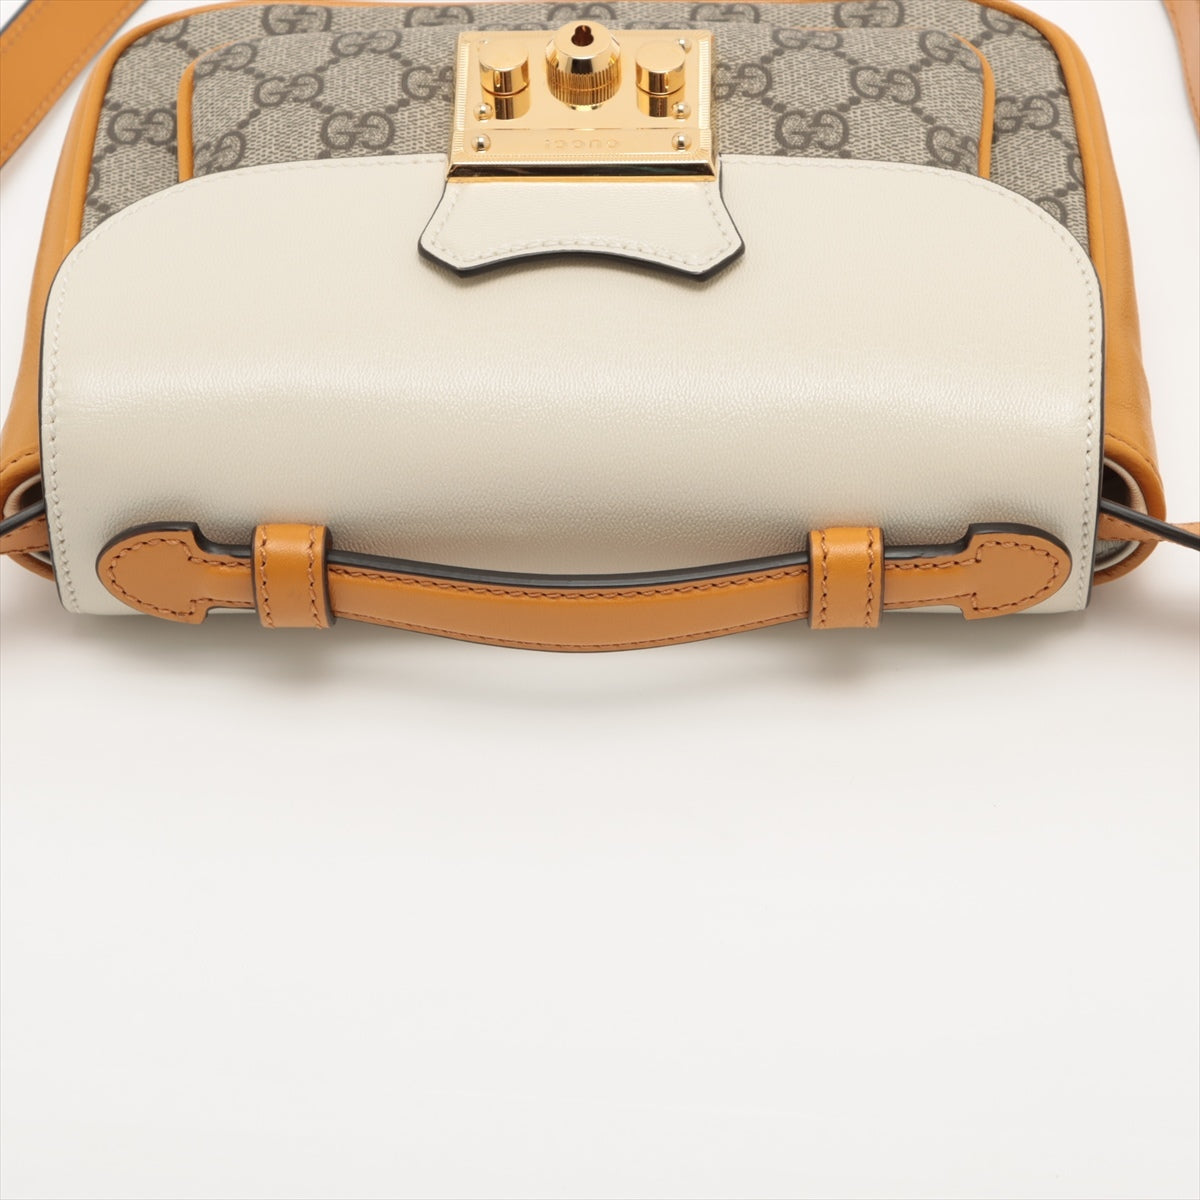 Gucci GG Supreme PVC & leather Shoulder bag Beige x yellow 658487